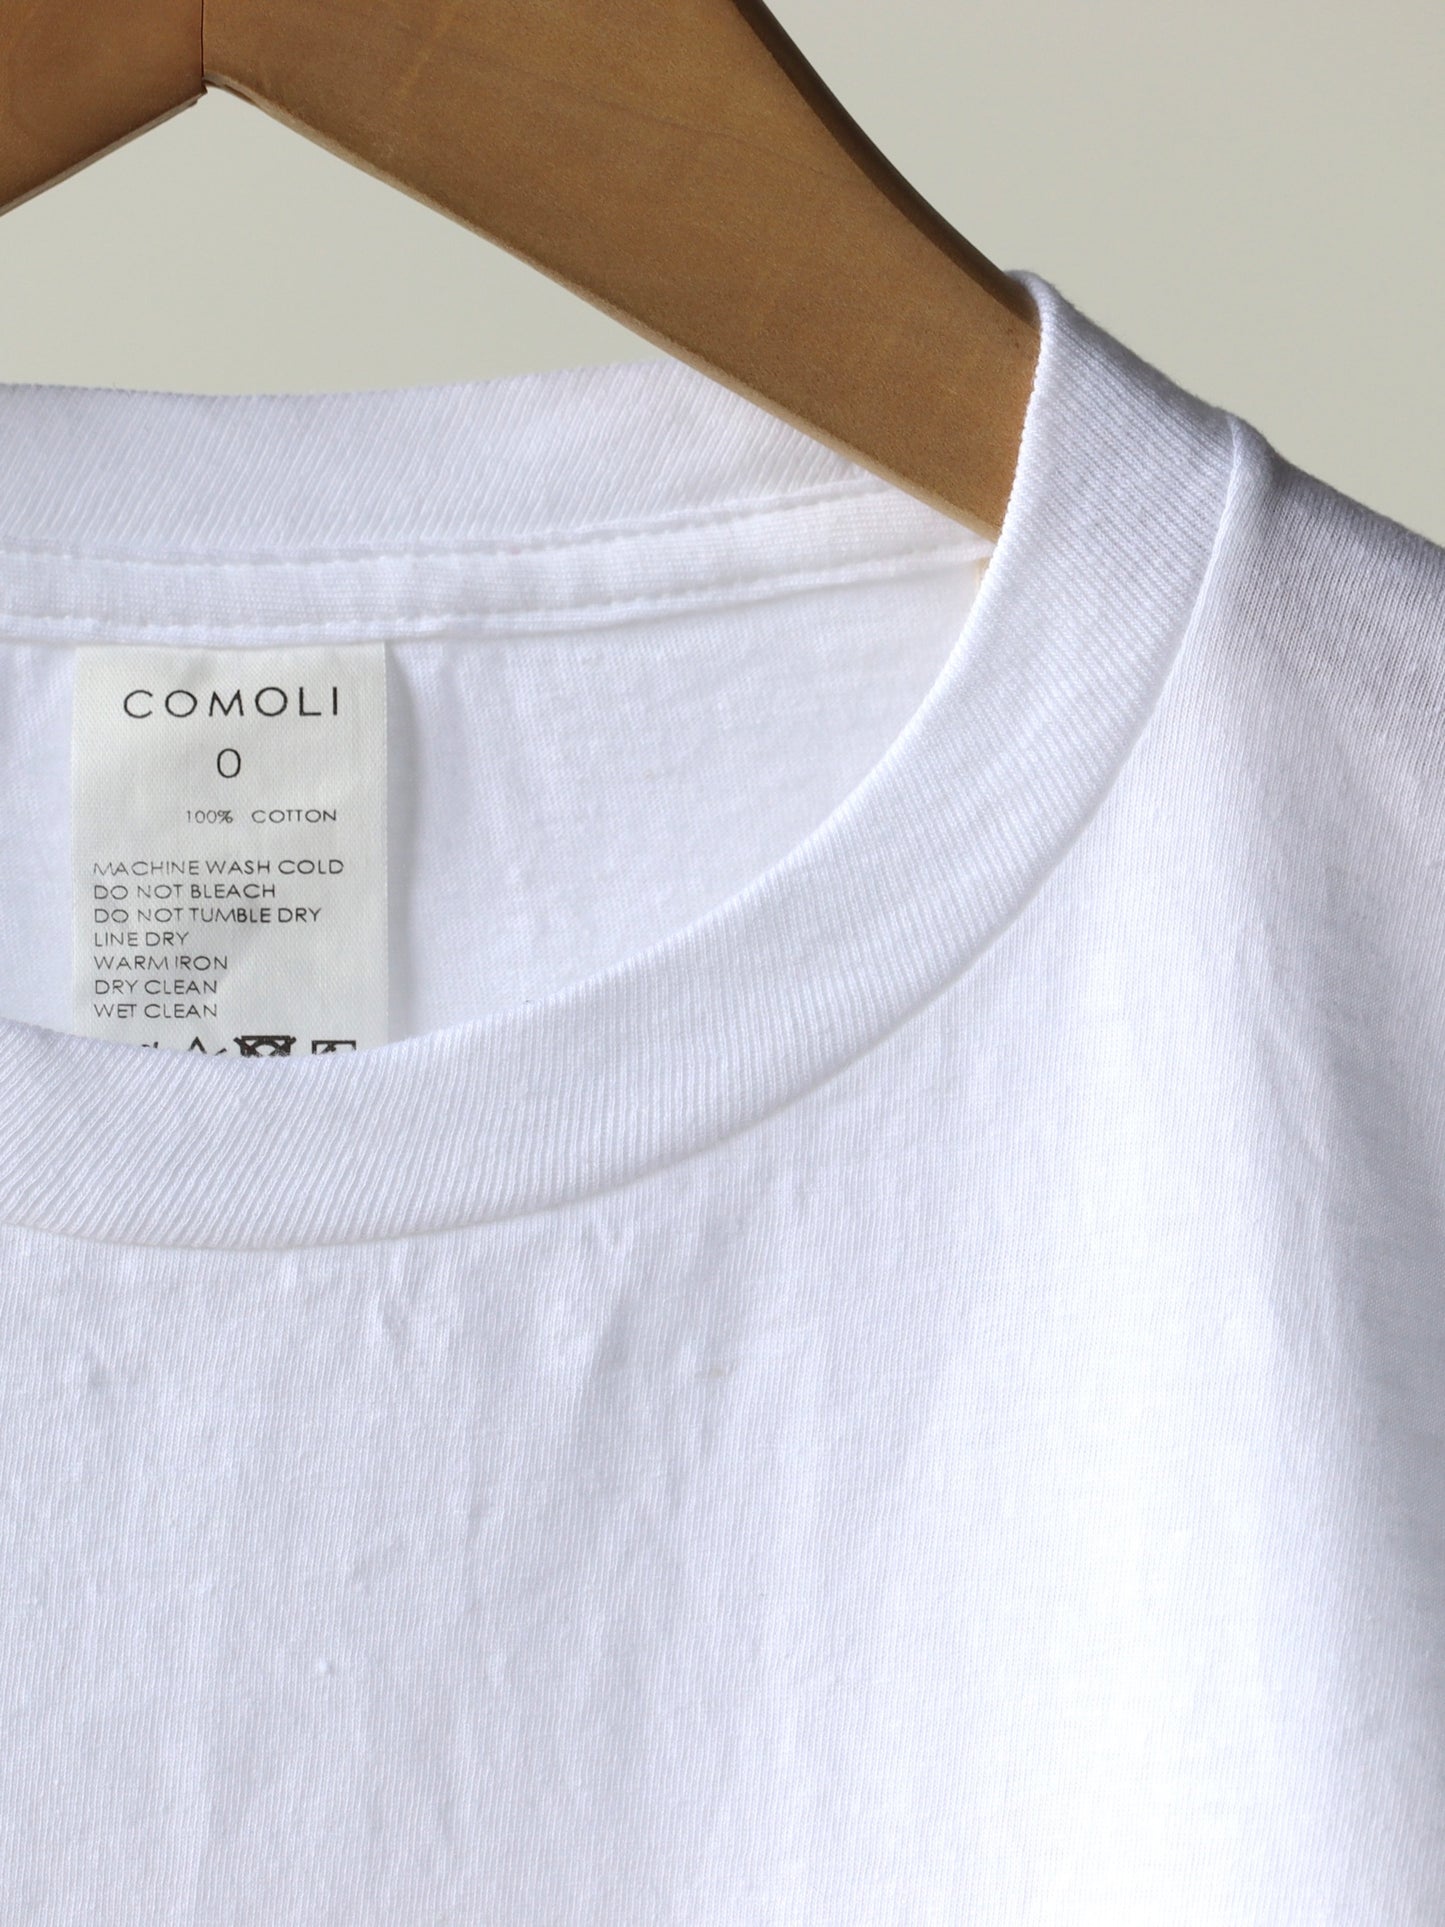 comoli-サープラス-tシャツ-white-2